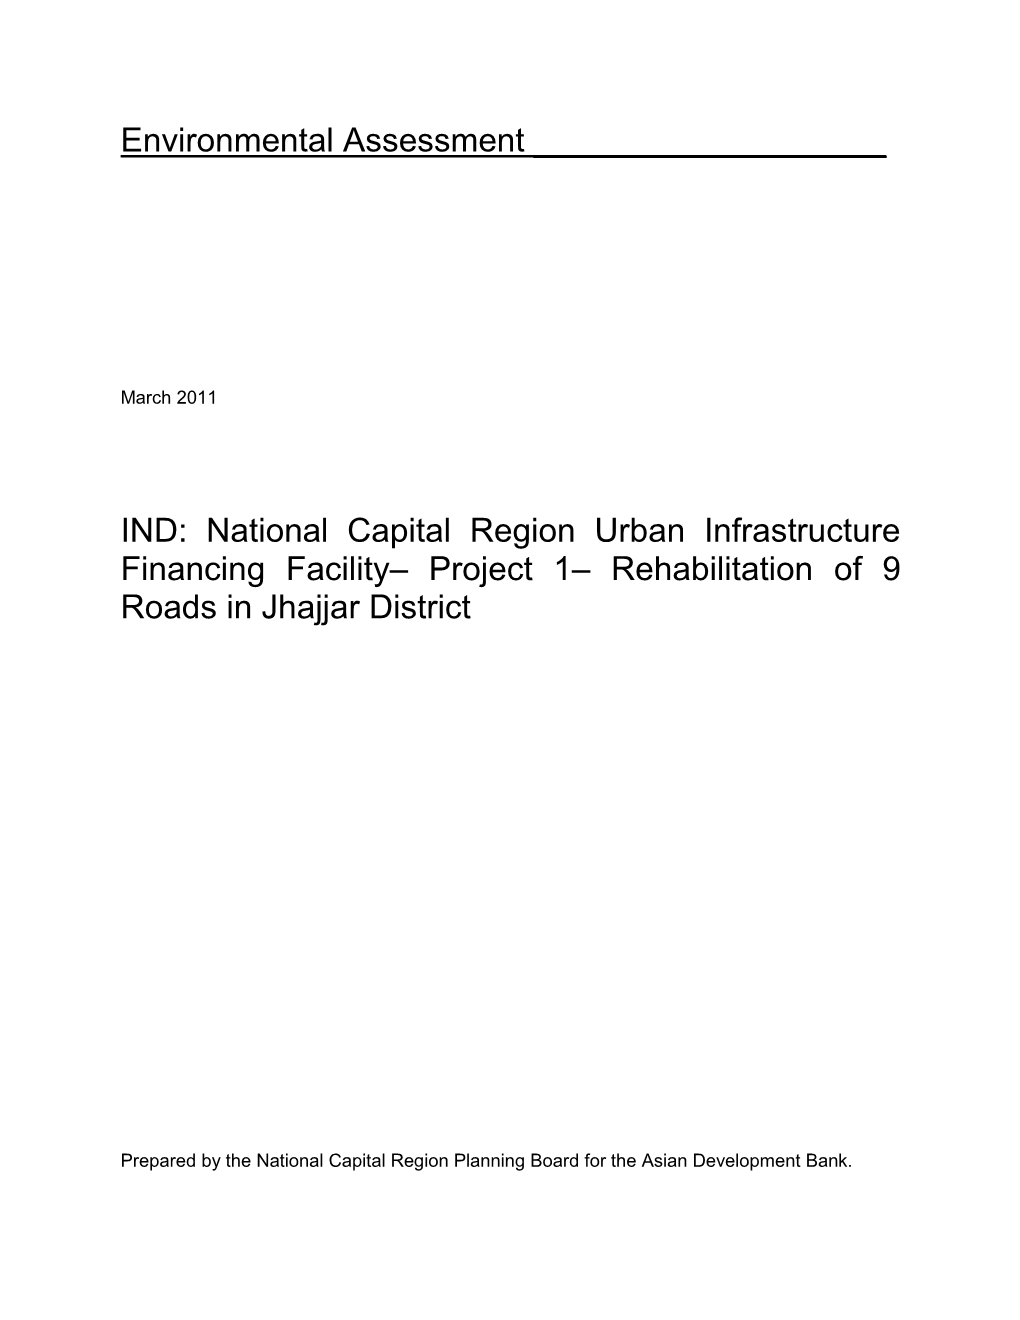 EARF: India: National Capital Region Urban Infrastructure Financing